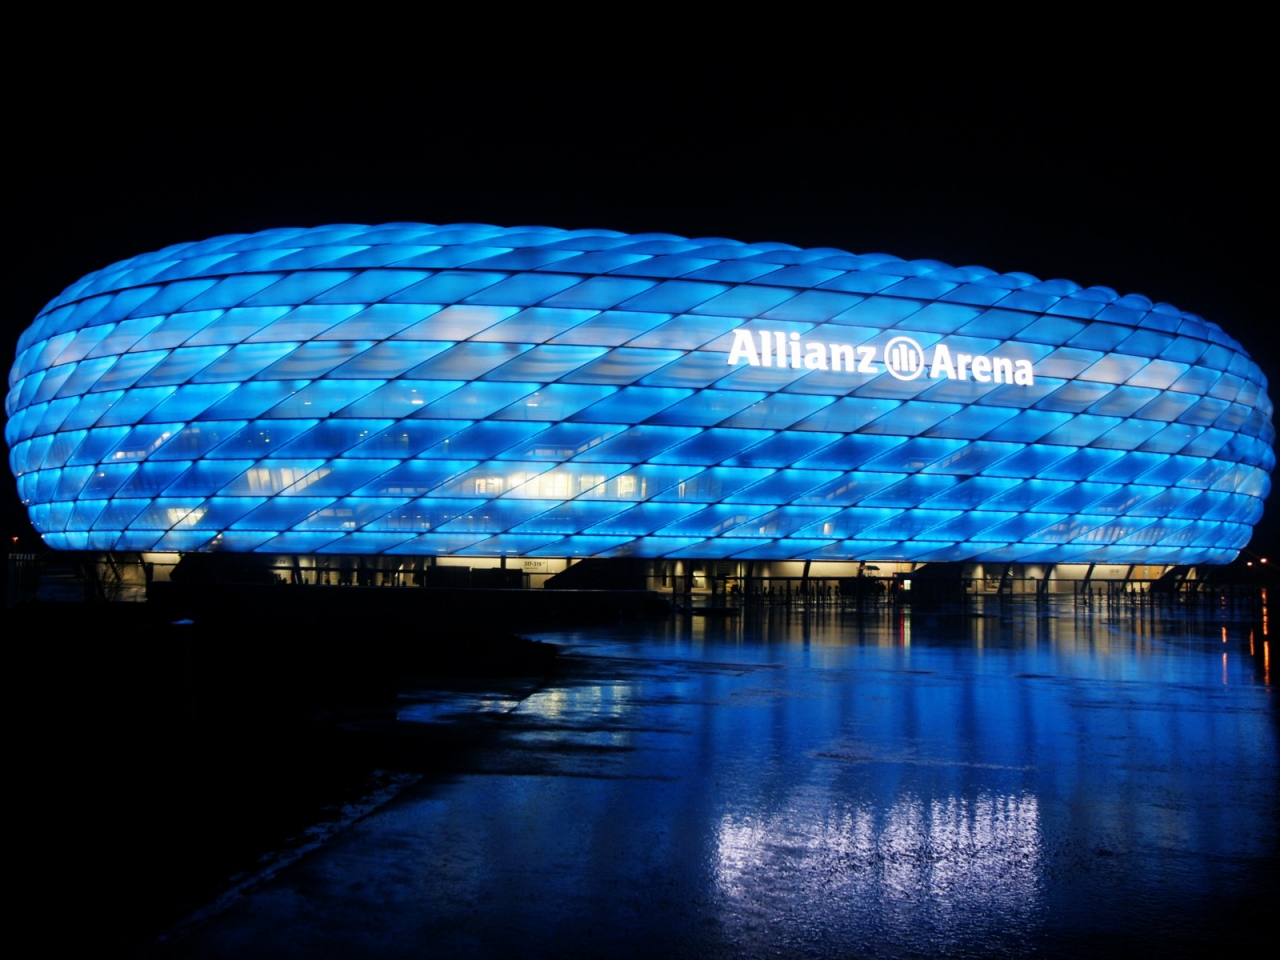 The Allianz Arena Munich for 1280 x 960 resolution